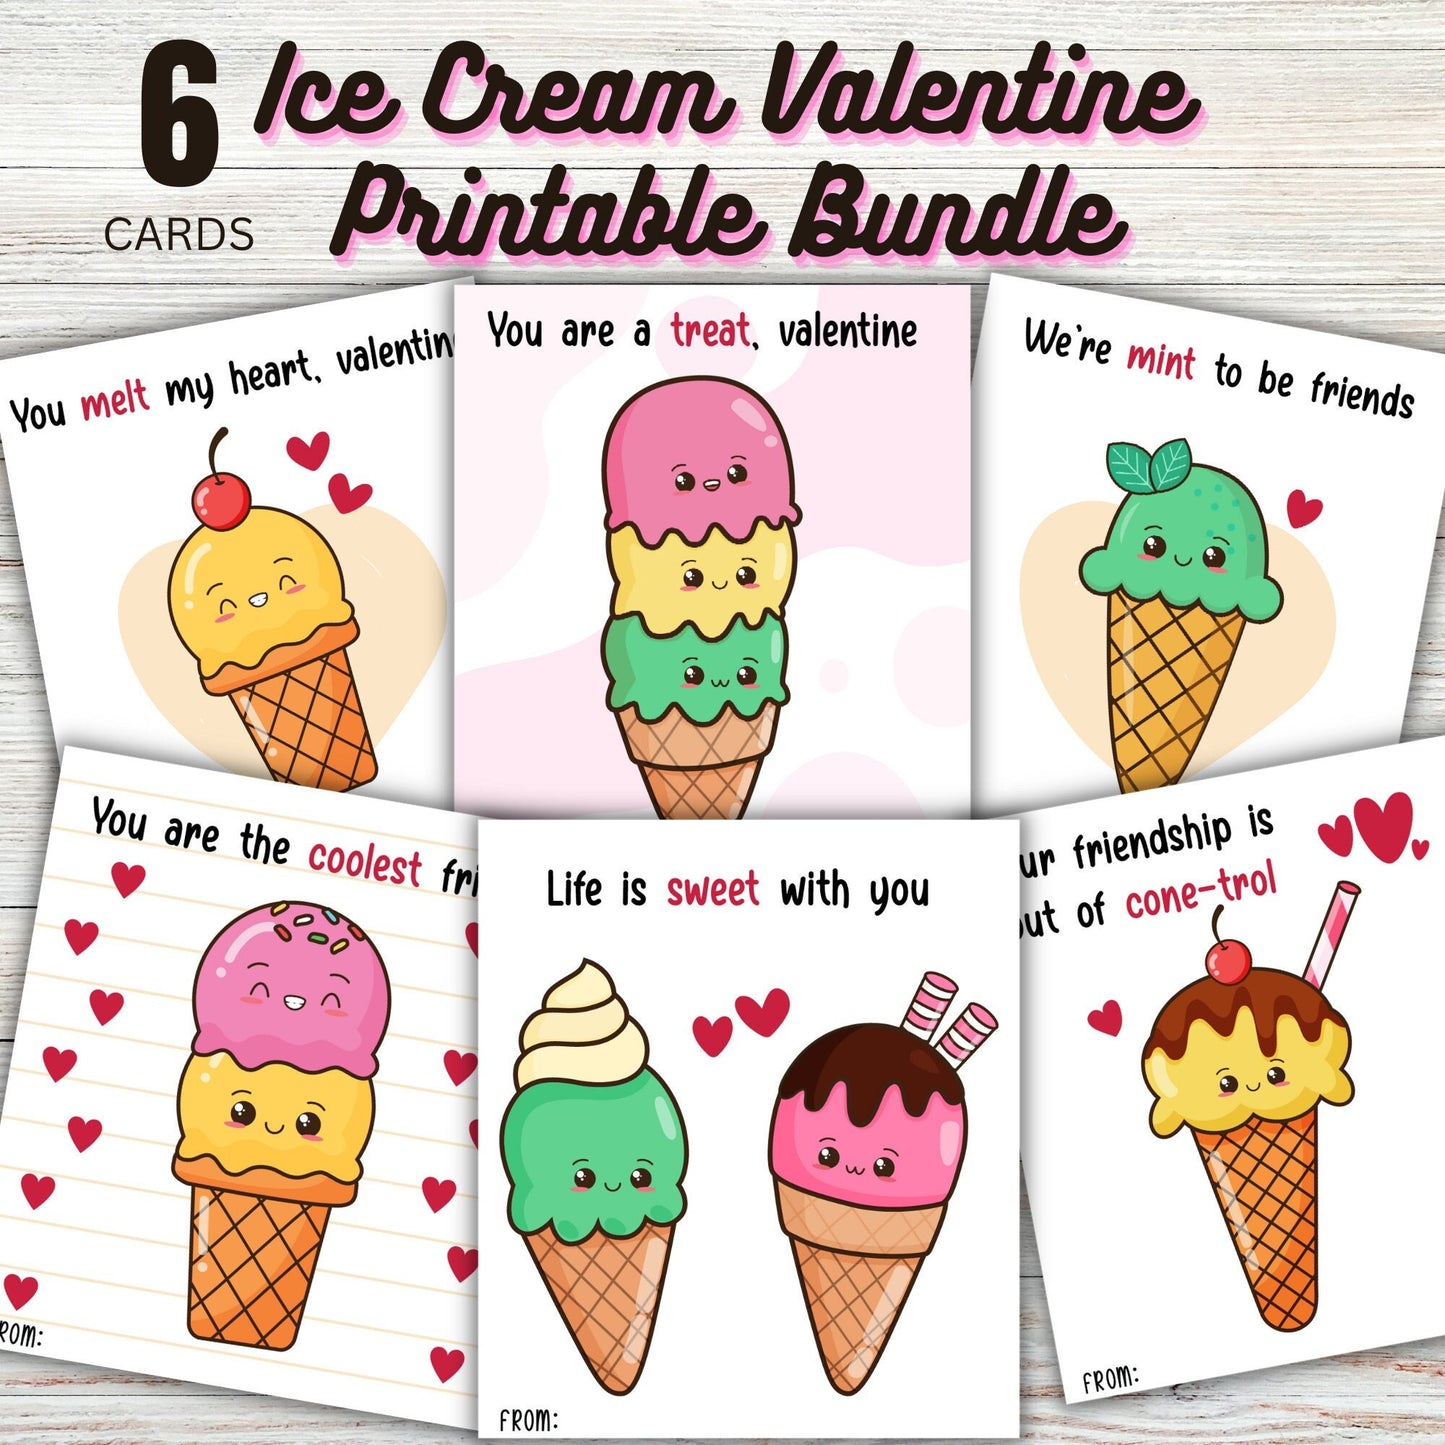 Ice Cream Valentine Printable Bundle - Valentines Day Printable Cards PDF - Instant Download